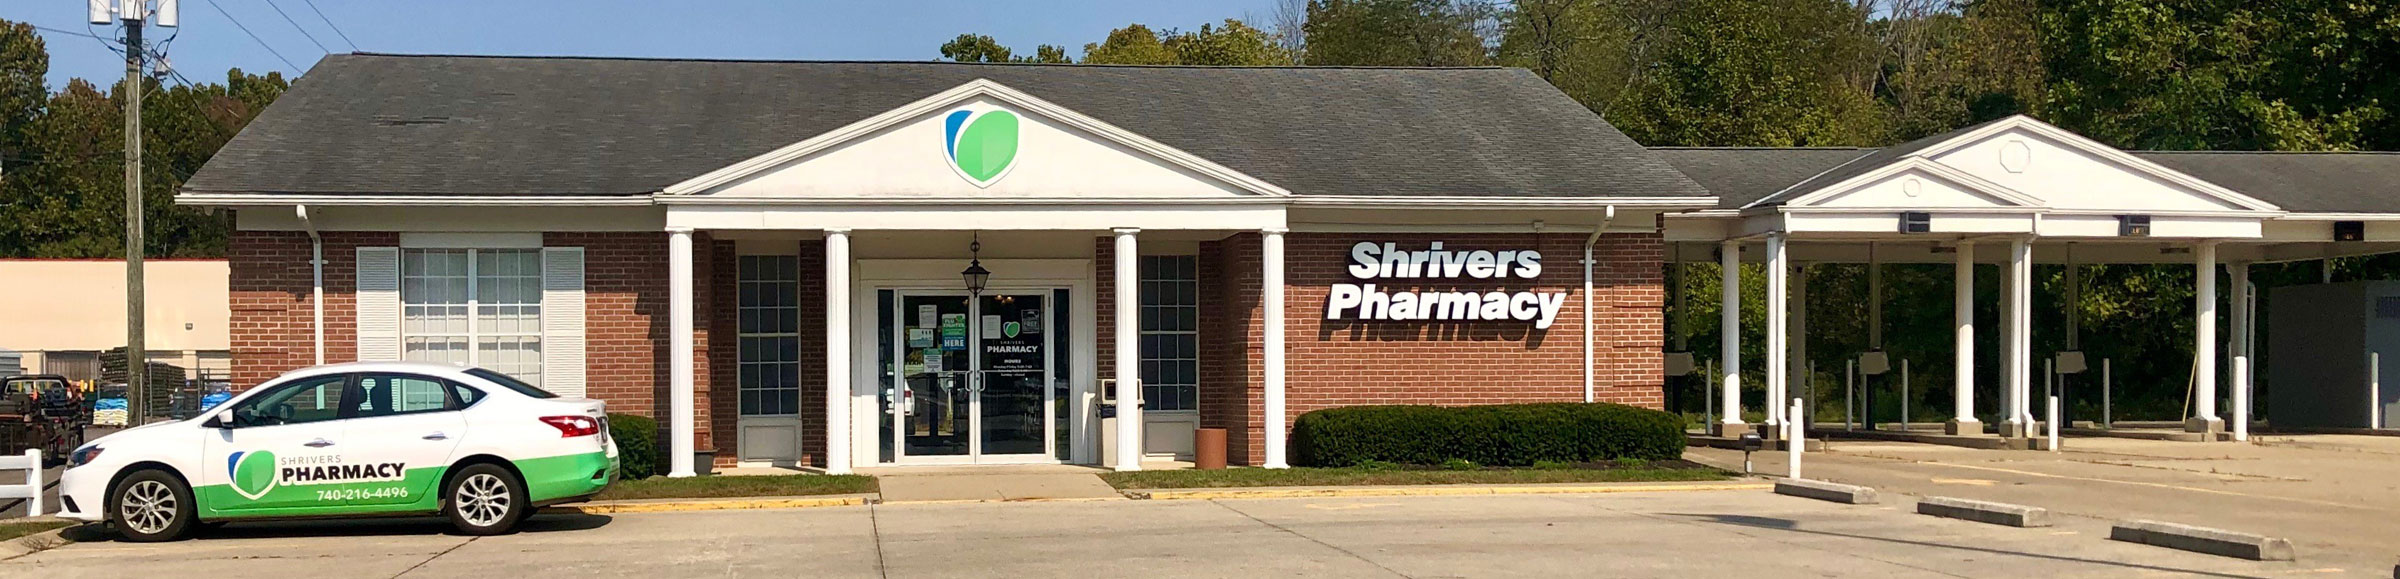 Shrivers-Pharmacy-Logan-Ohio-px